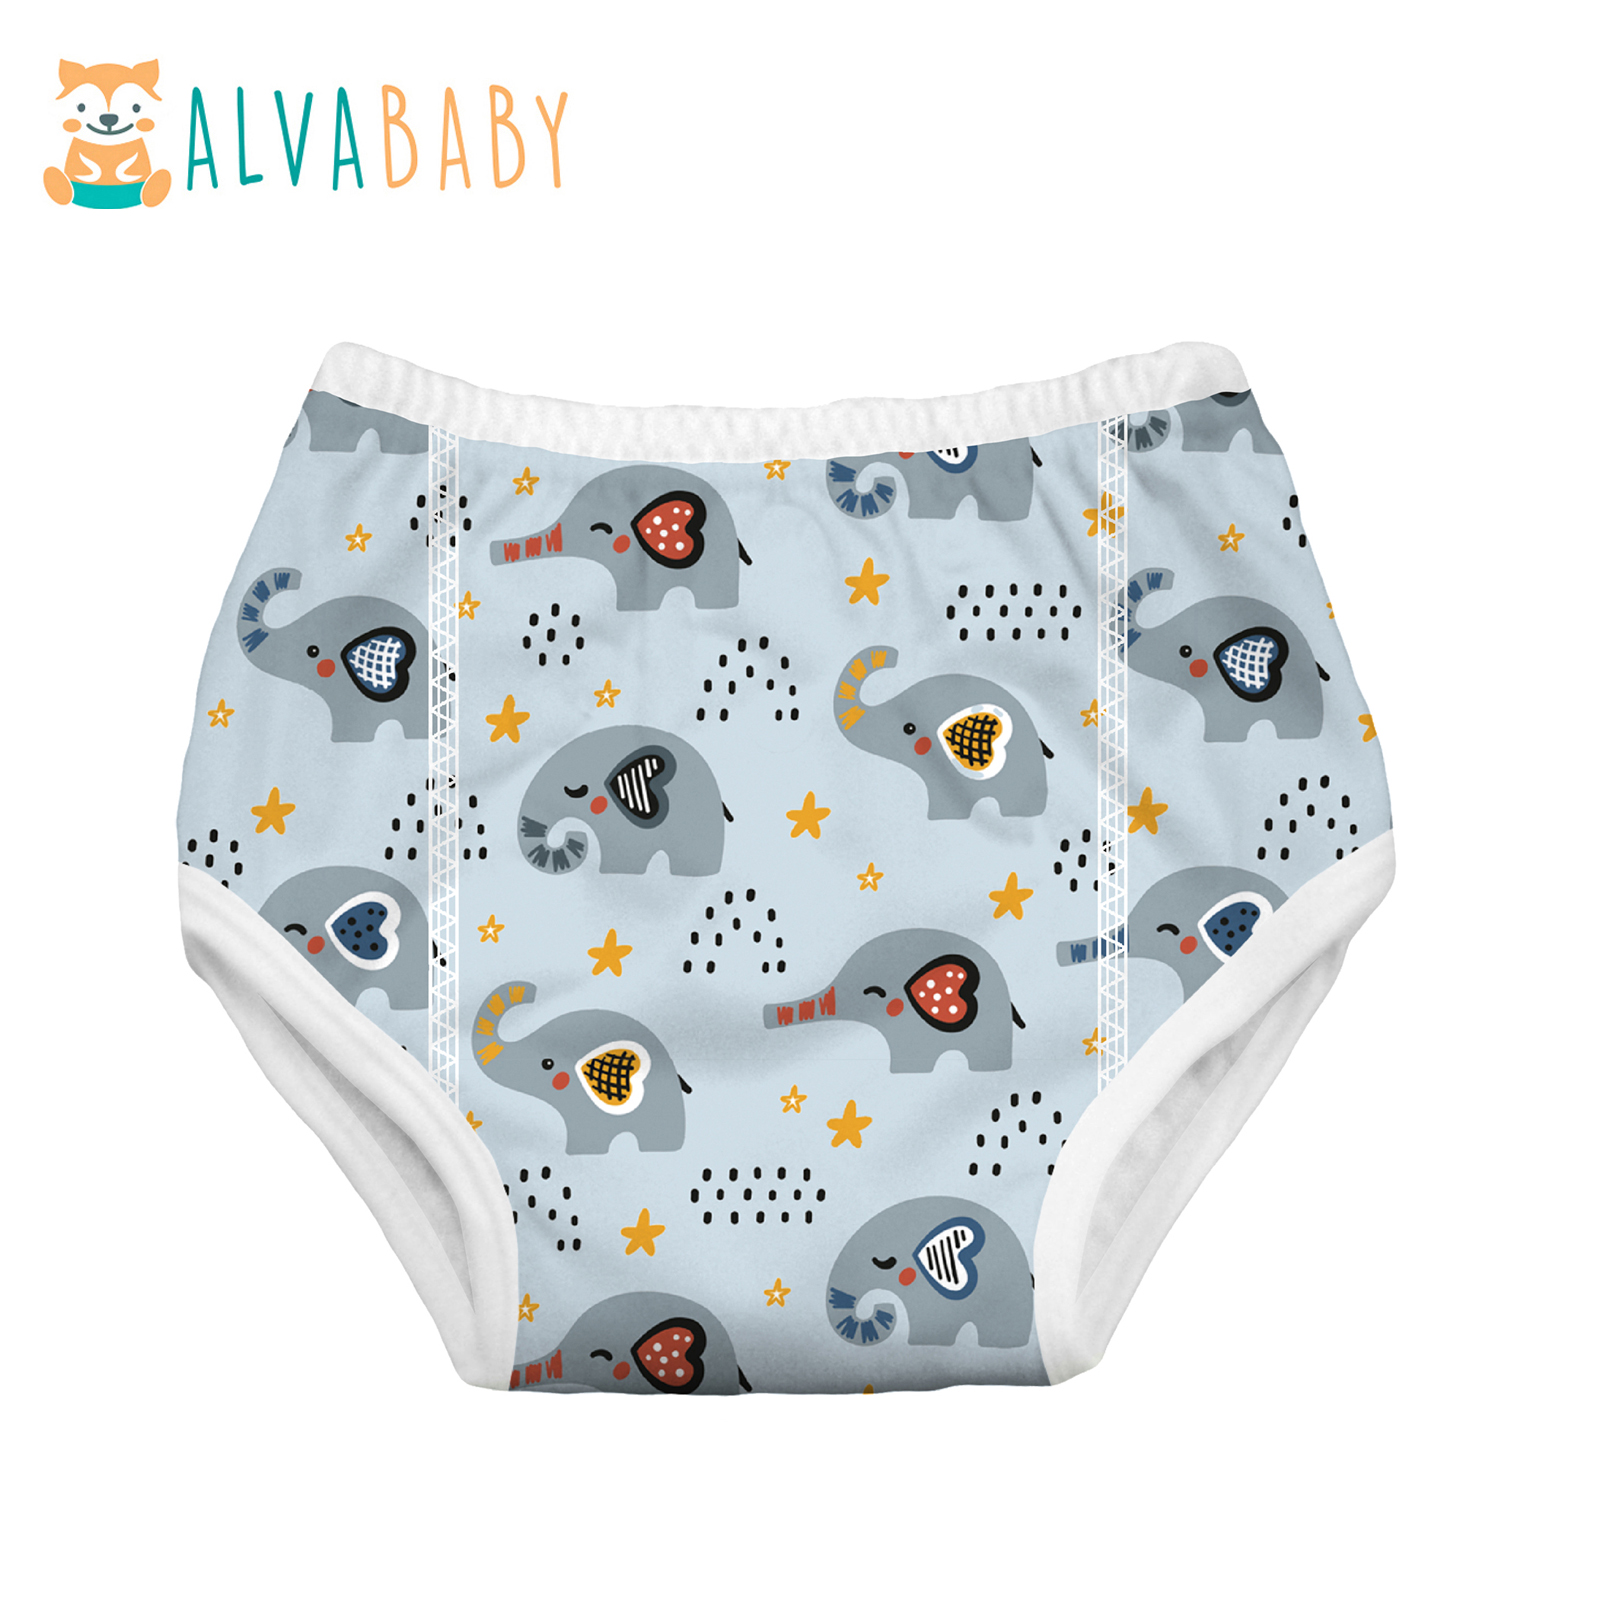 BIG ELEPHANT Toddler Potty Training Pants Baby Boys Underwear, - Import It  All